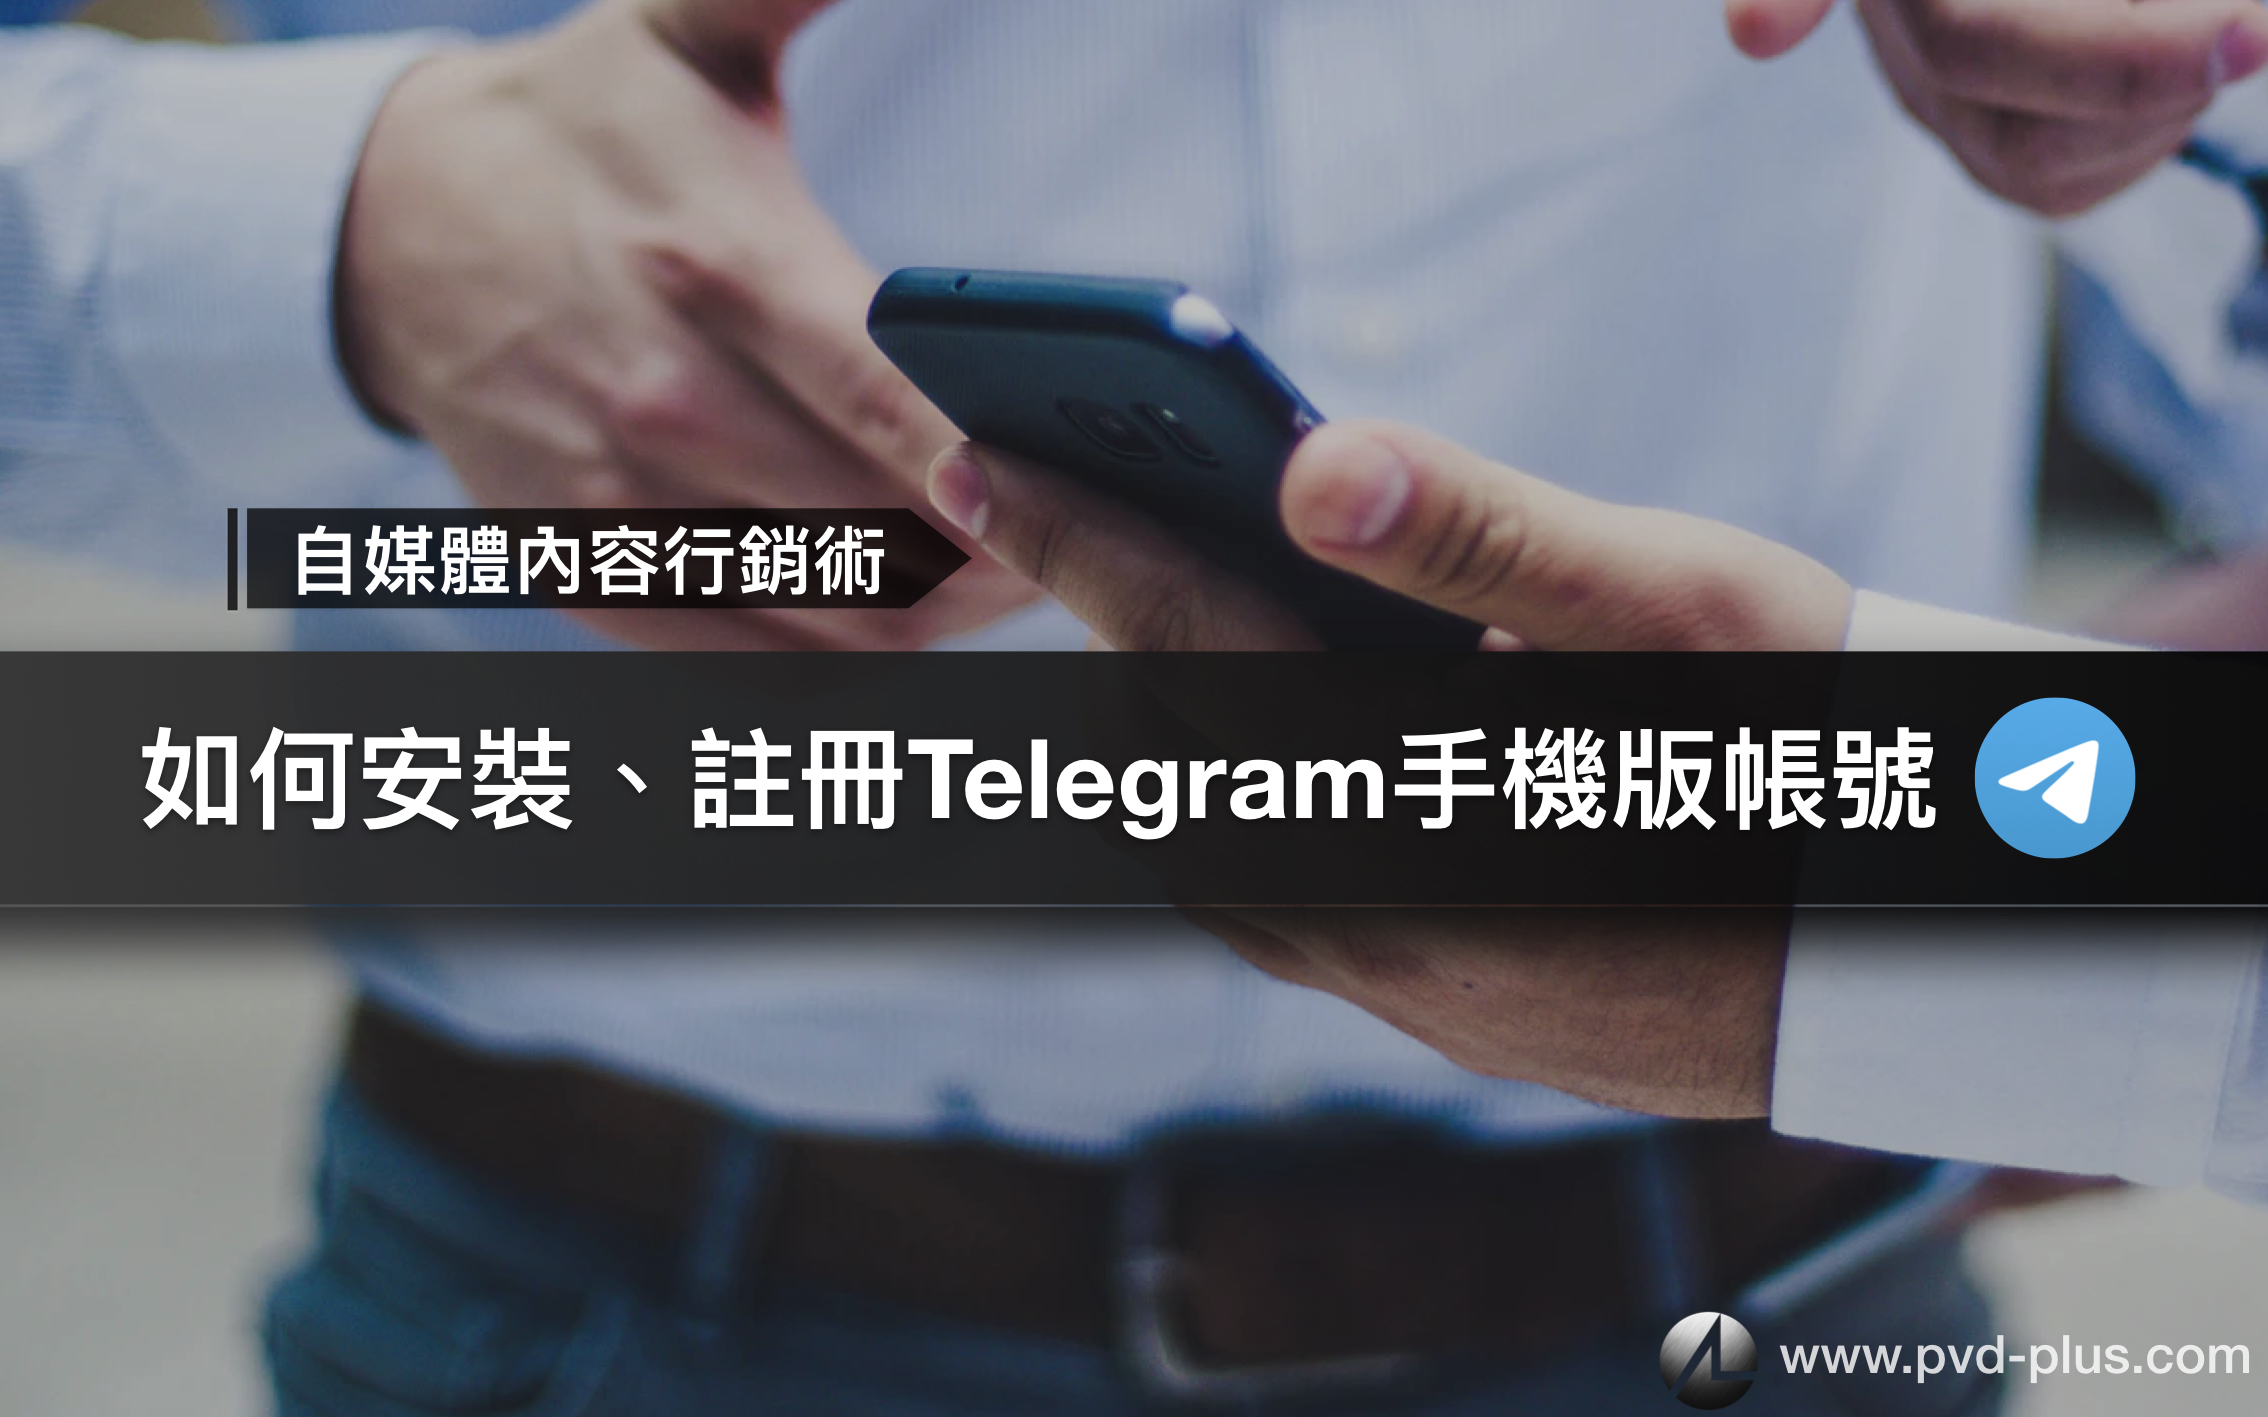 Telegram教學｜新手如何安裝、電話驗證、註冊帳號、中文化